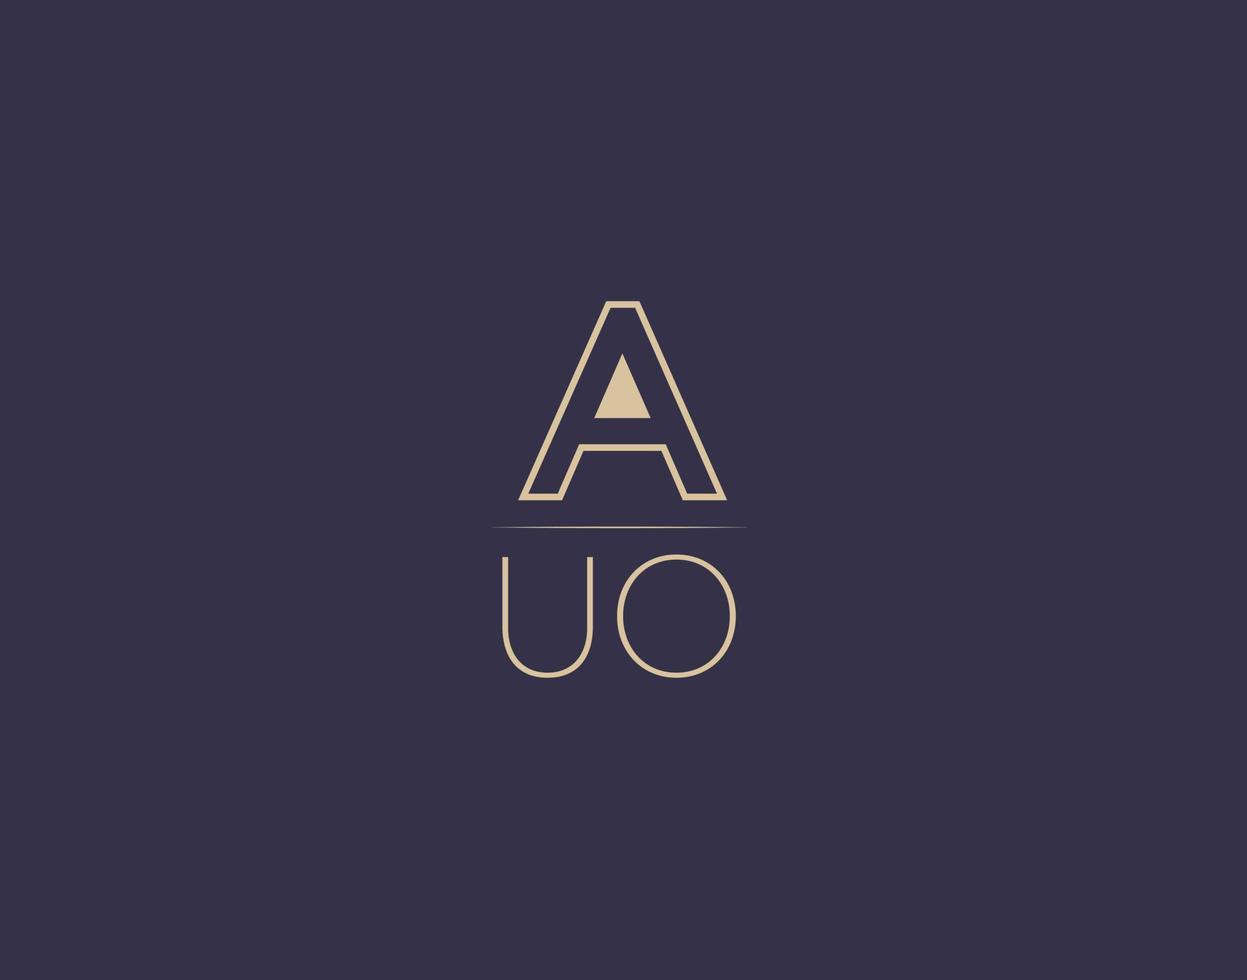 AUO letter logo design modern minimalist vector images